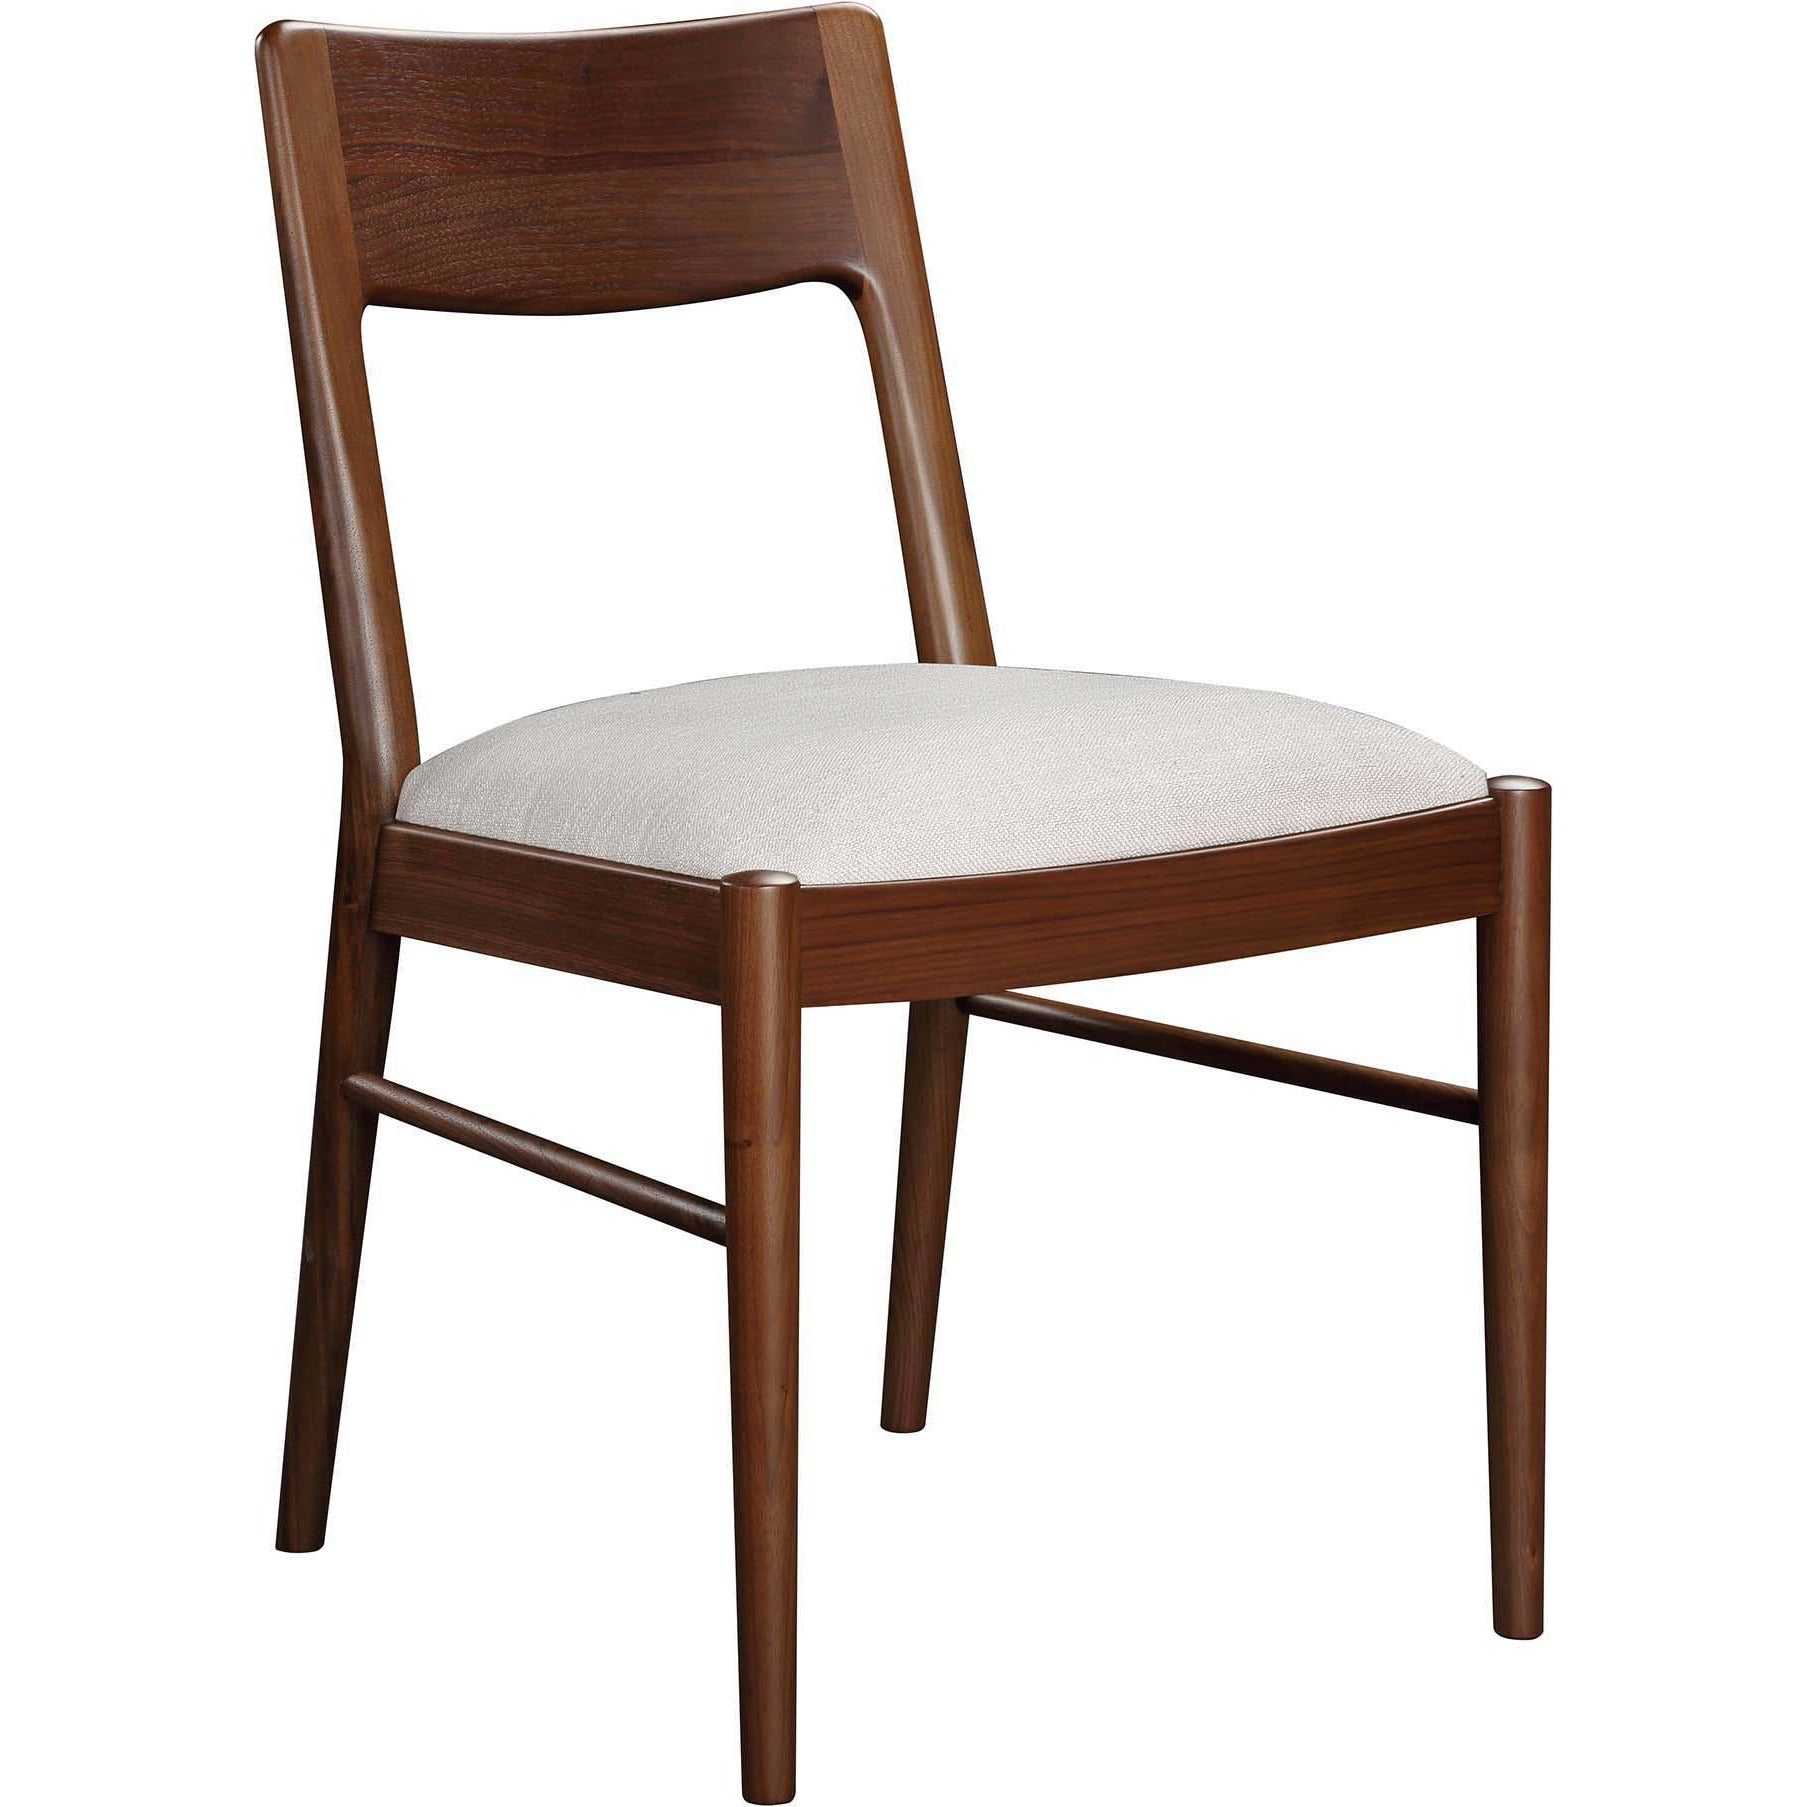 Walnut Grove Side Chair - Leather